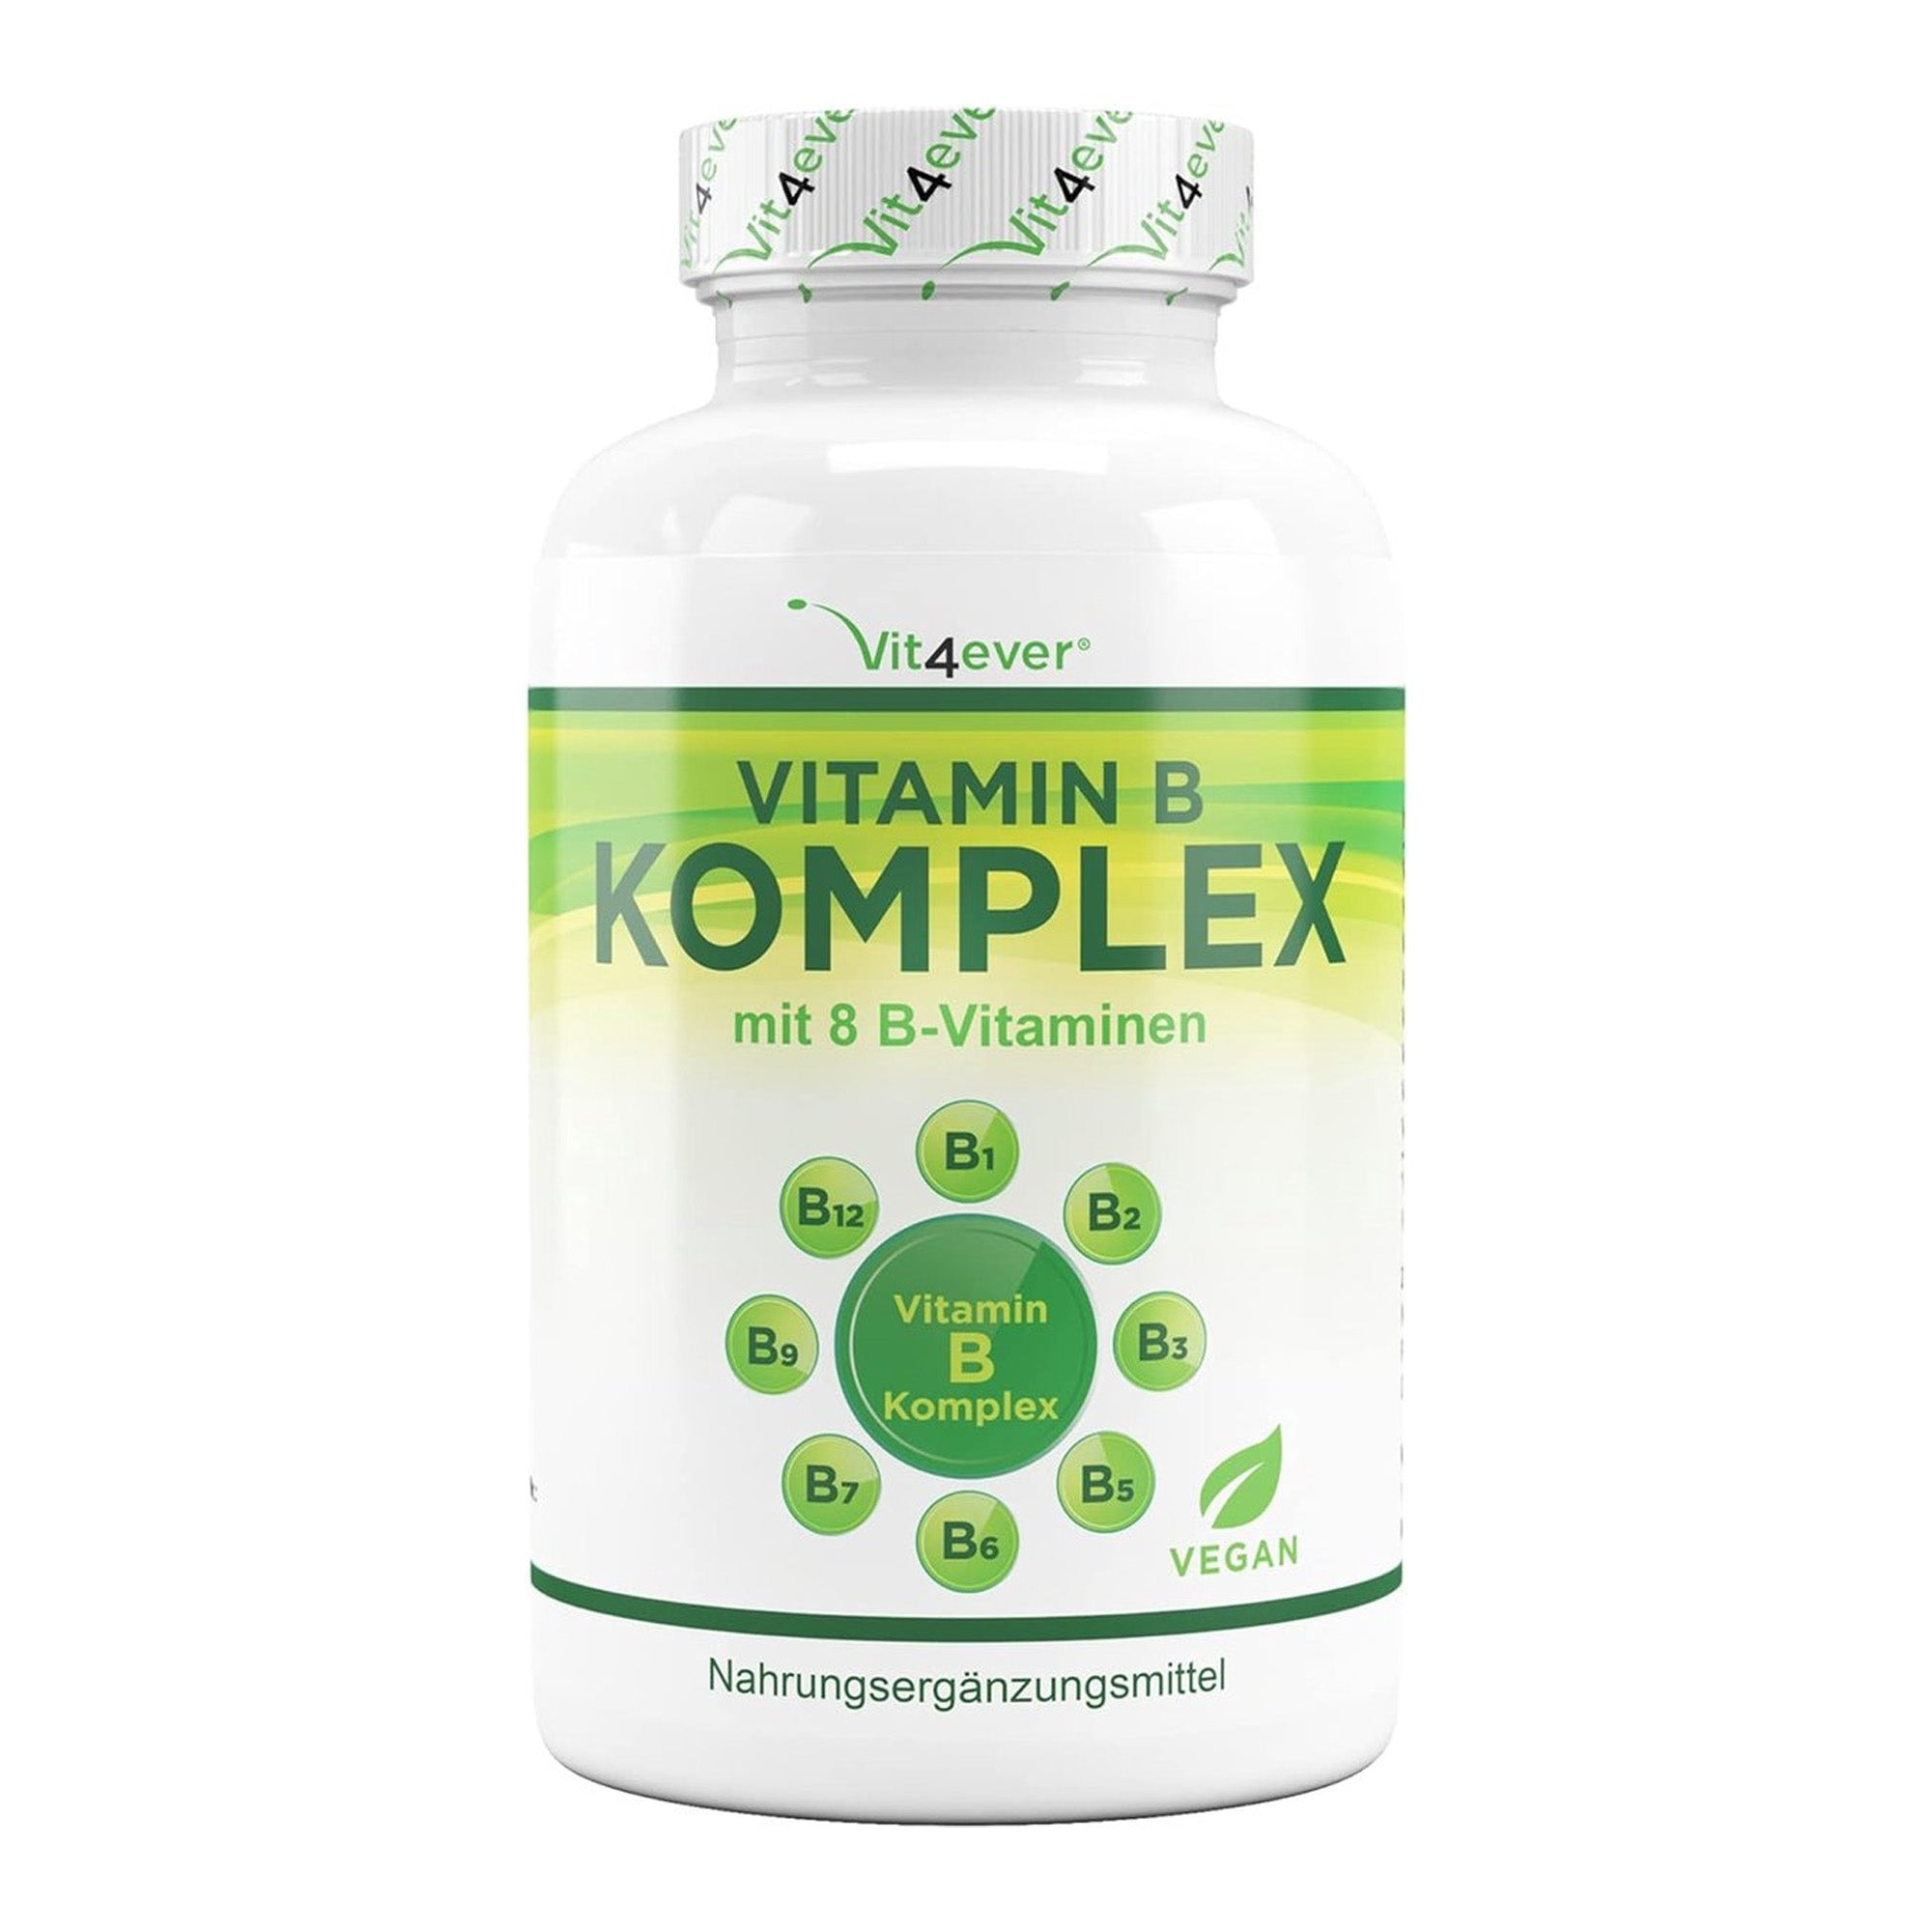 vit4ever vitamine B complex